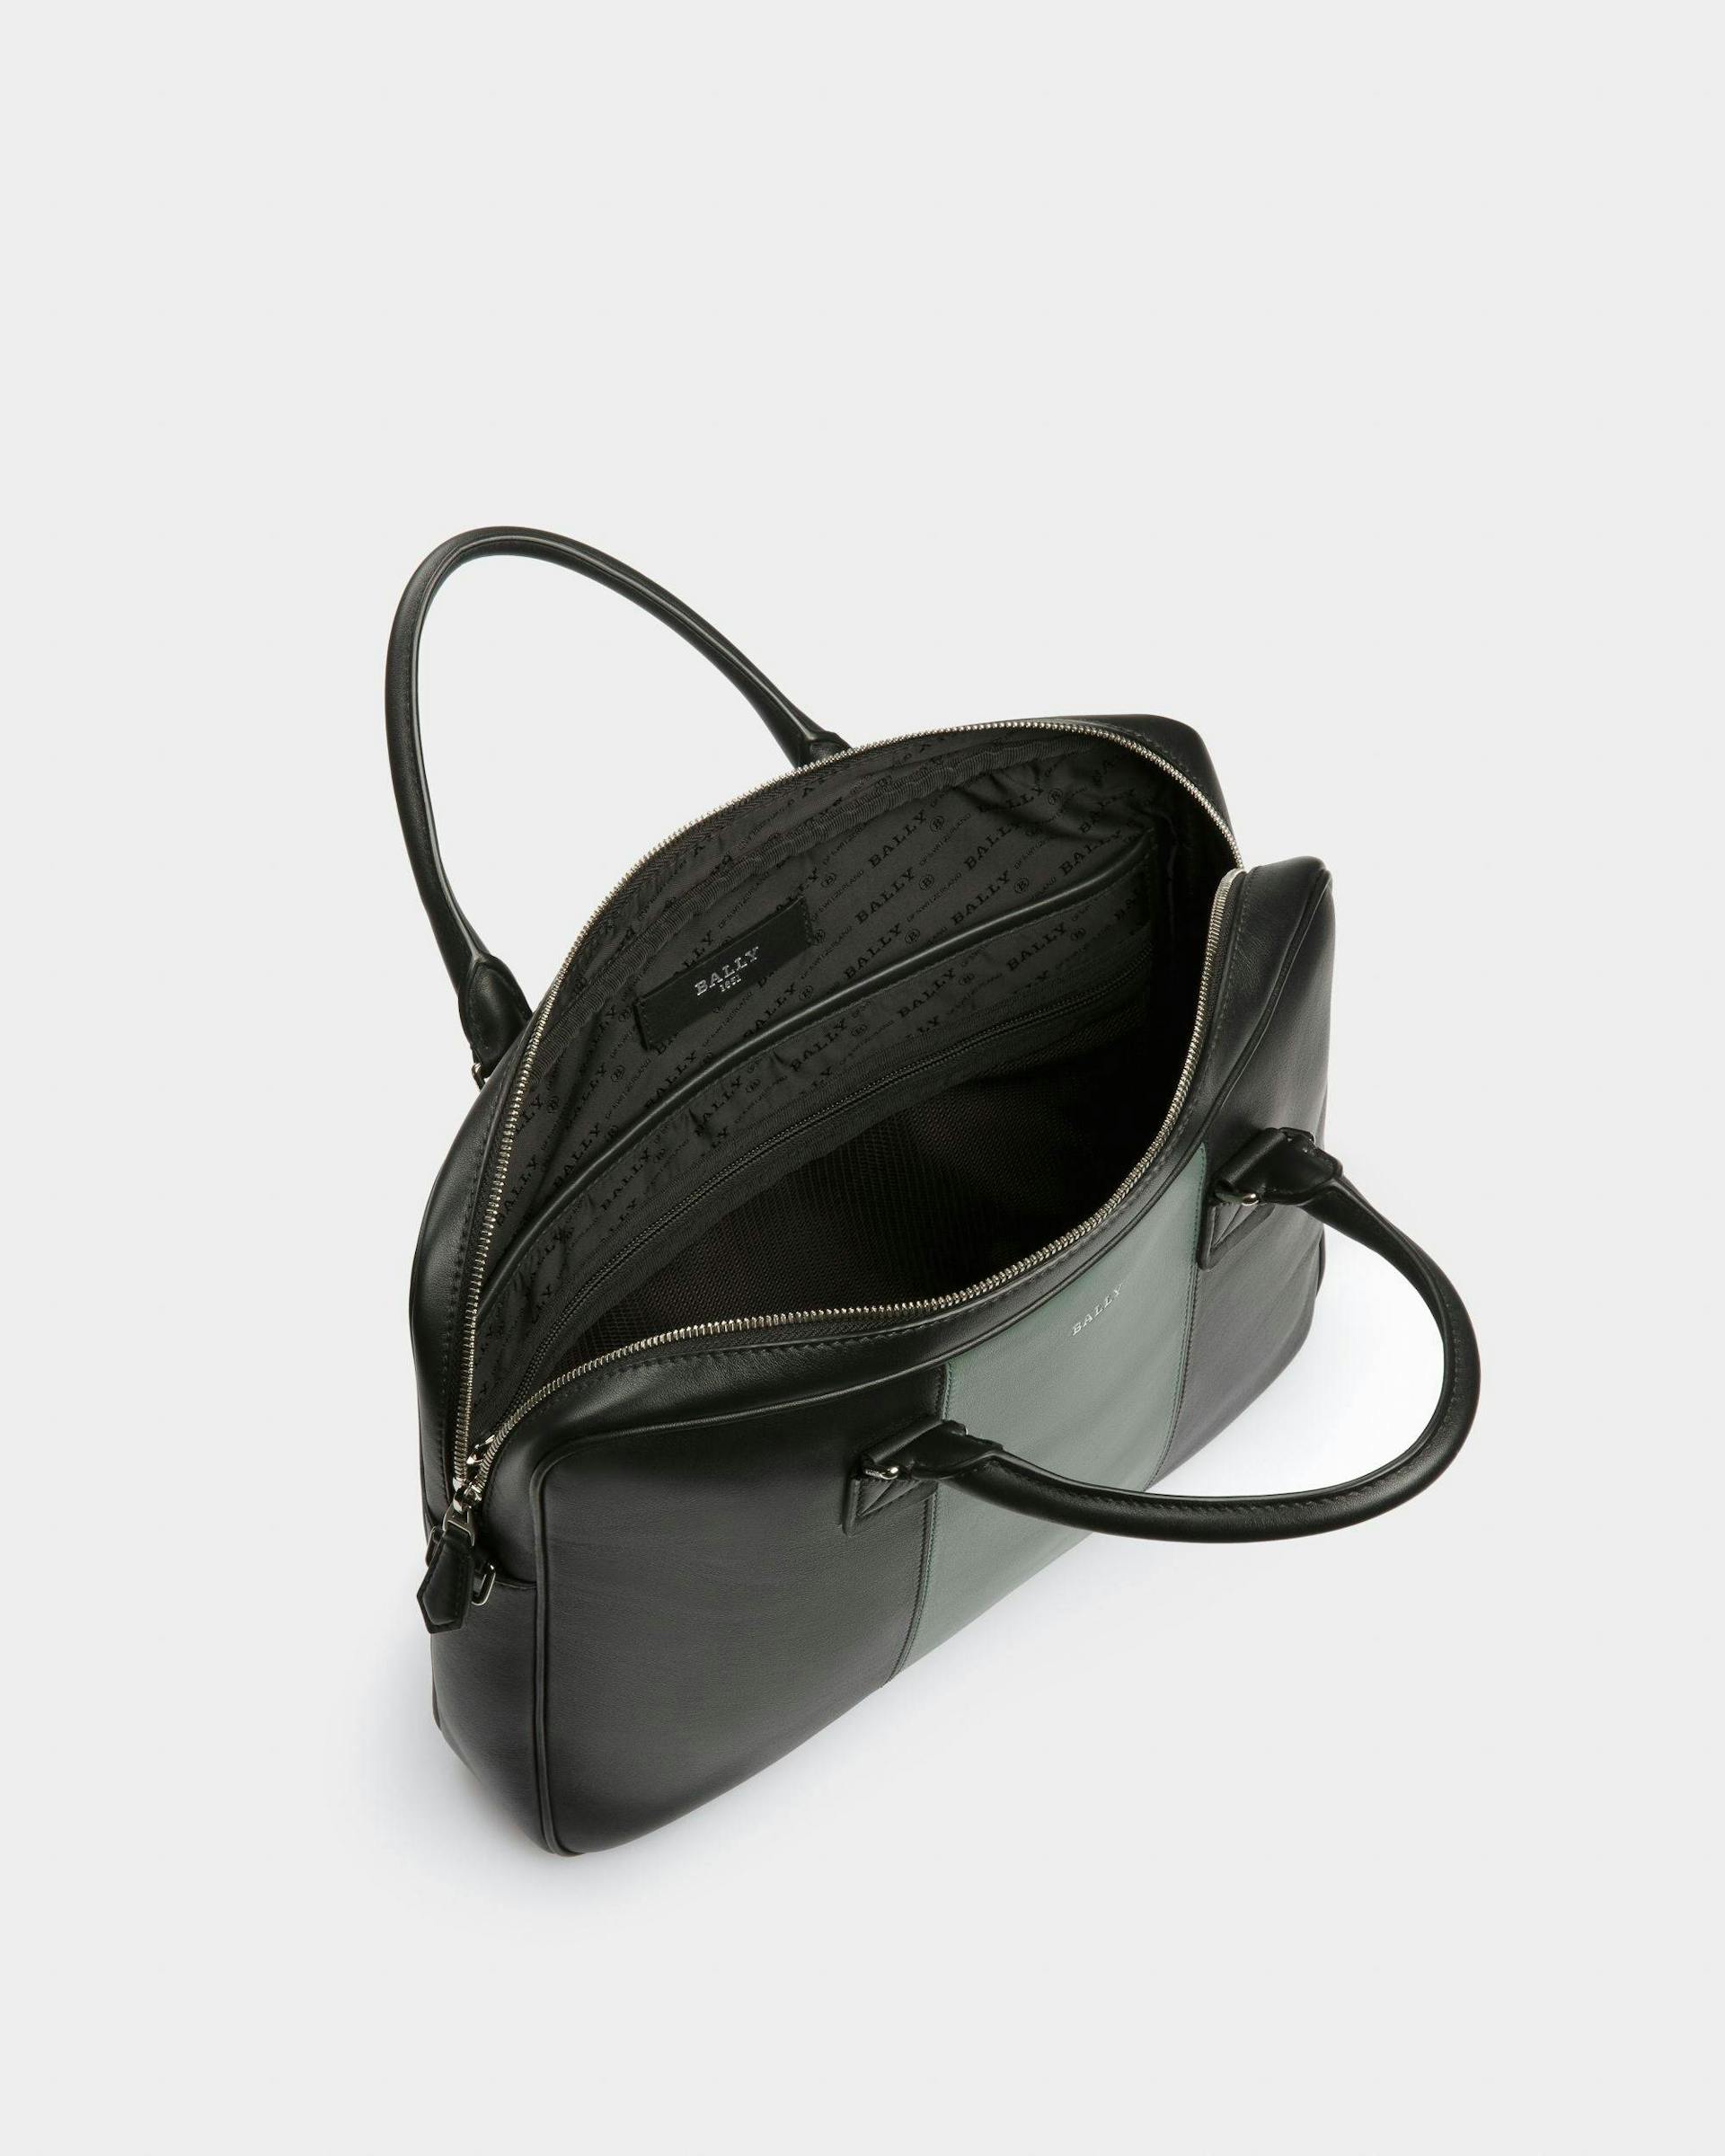 Hesines Leather Business Bag In Black & Green - Men's - Bally - 04